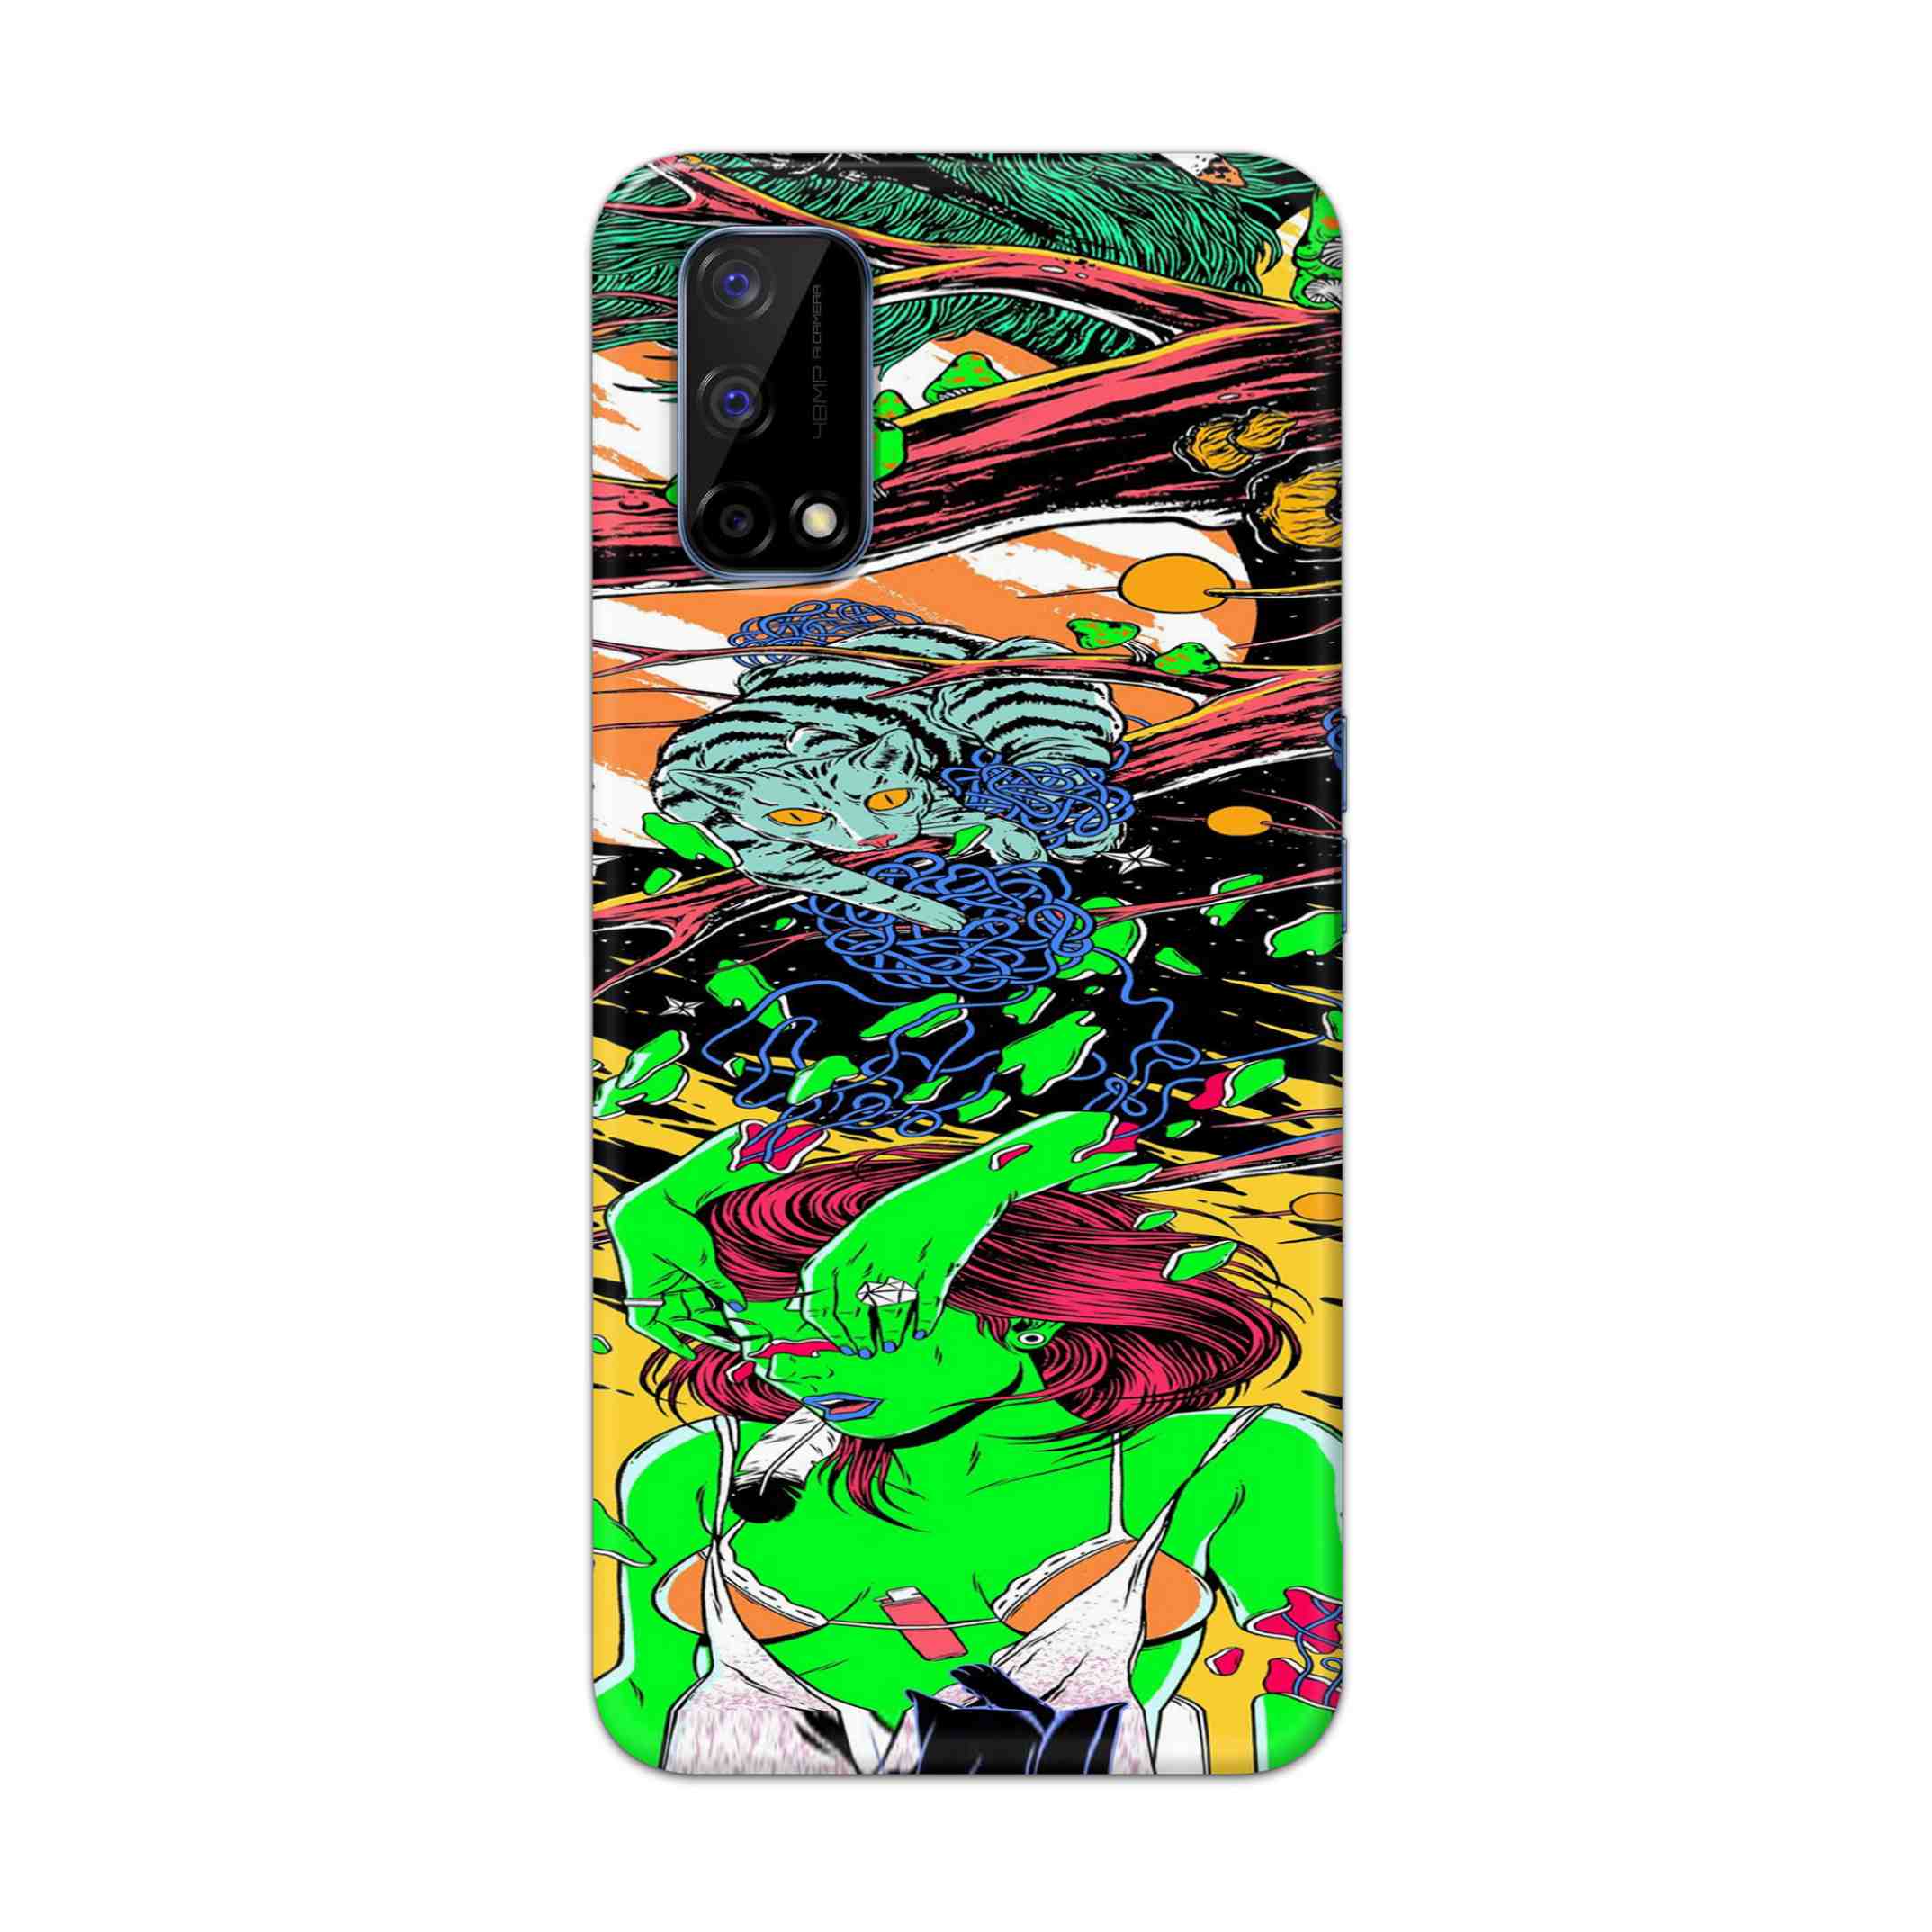 Buy Green Girl Art Hard Back Mobile Phone Case Cover For Realme Narzo 30 Pro Online